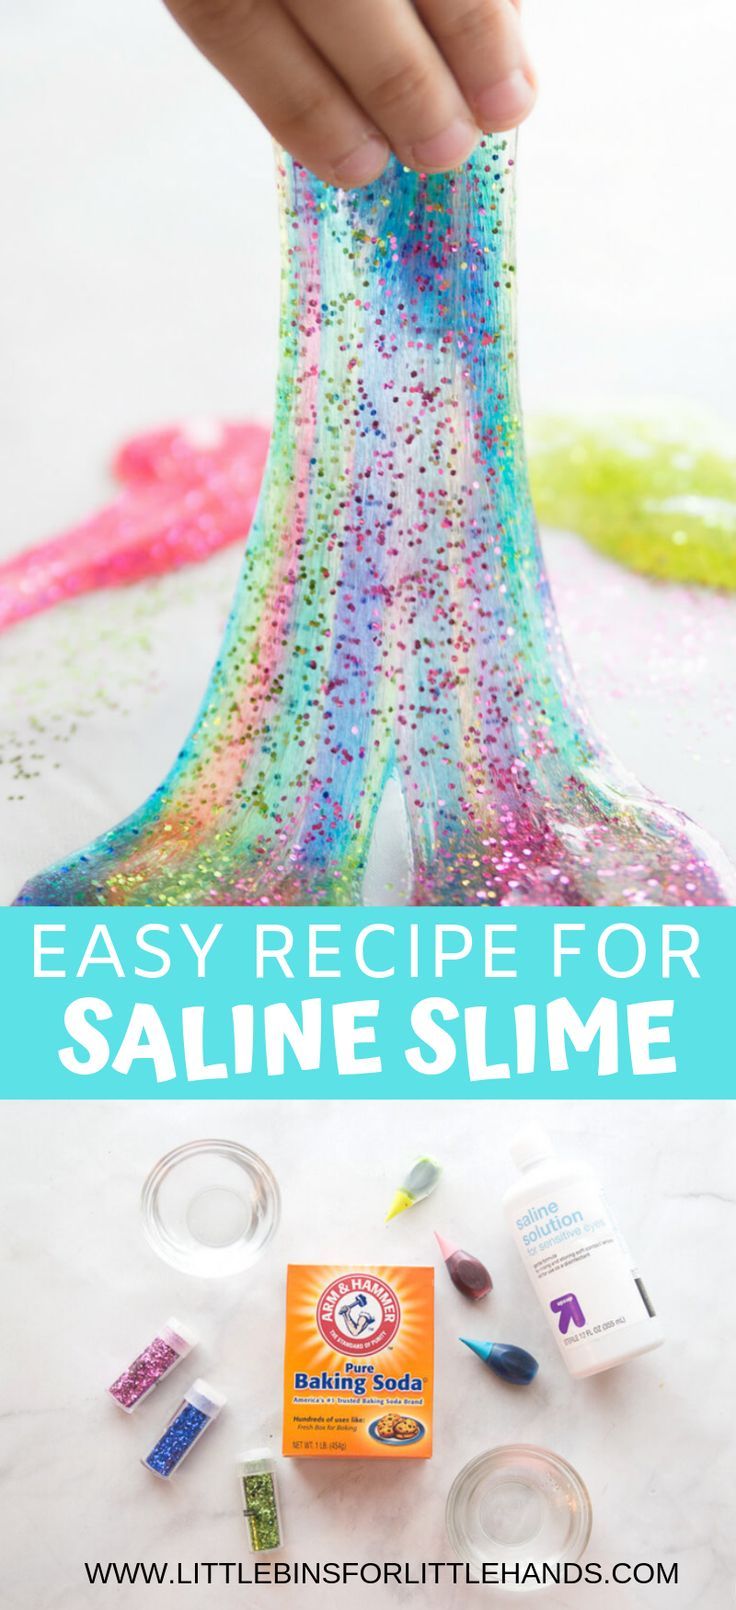 How To Make Saline Solution Slime - Little Bins for Little Hands